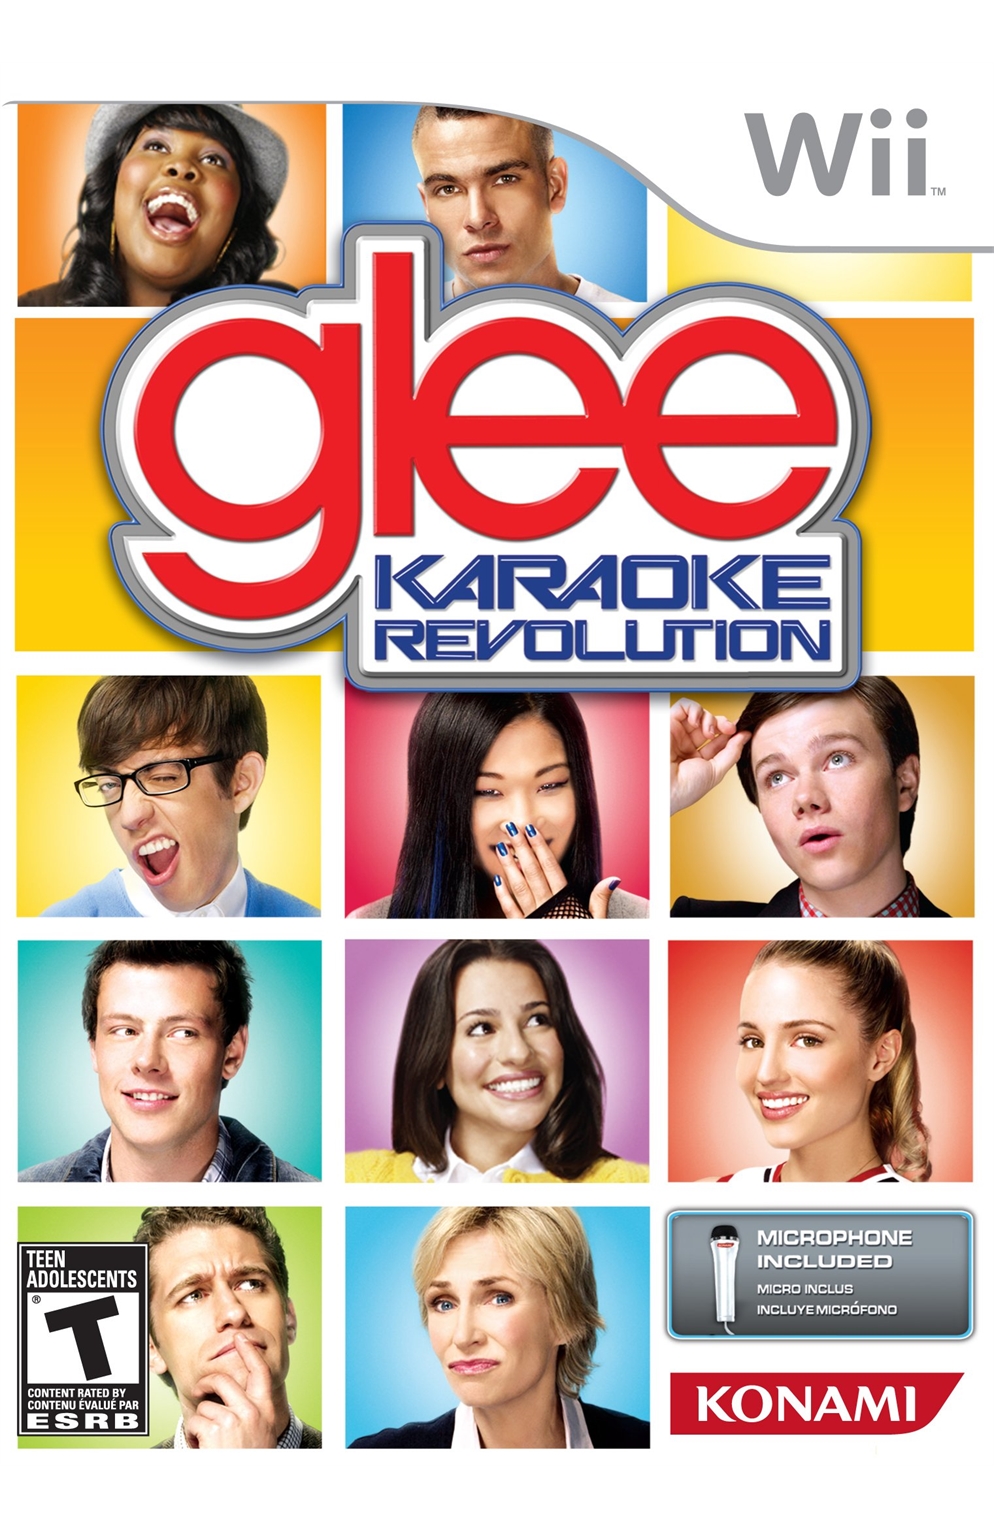 Nintendo Wii Glee Karaoke Revolution